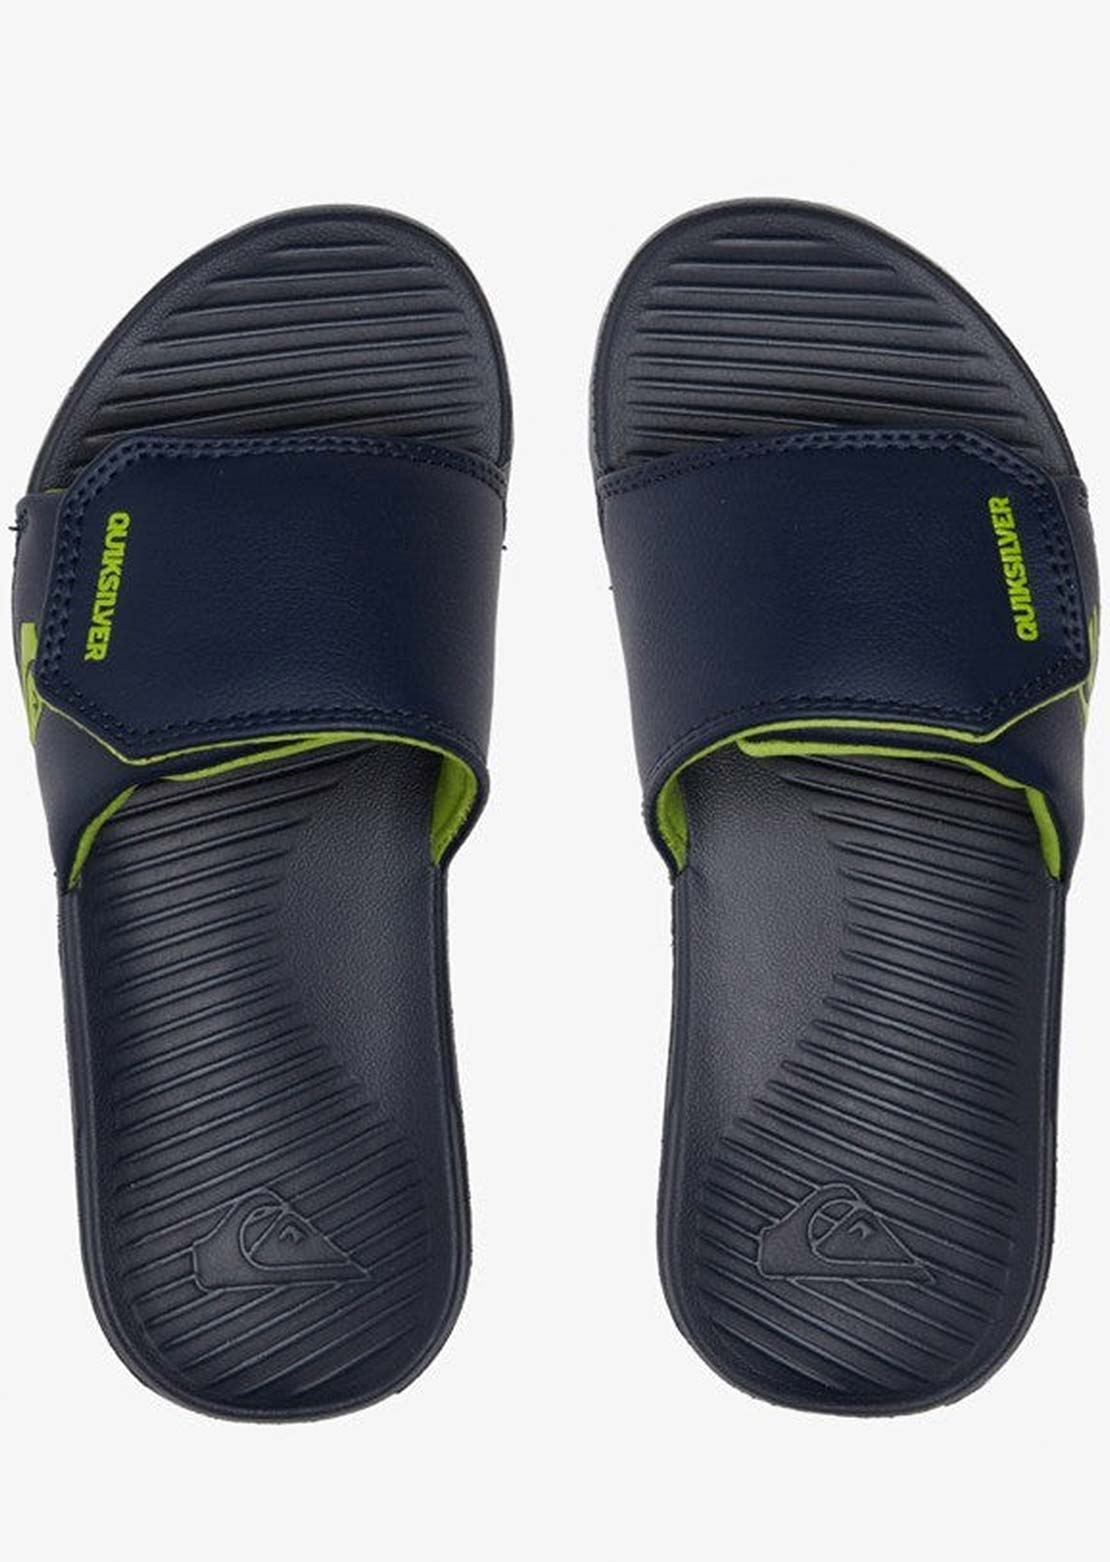 Quiksilver Junior Bright Coast Adjustable Sandals Blue/Blue/Green